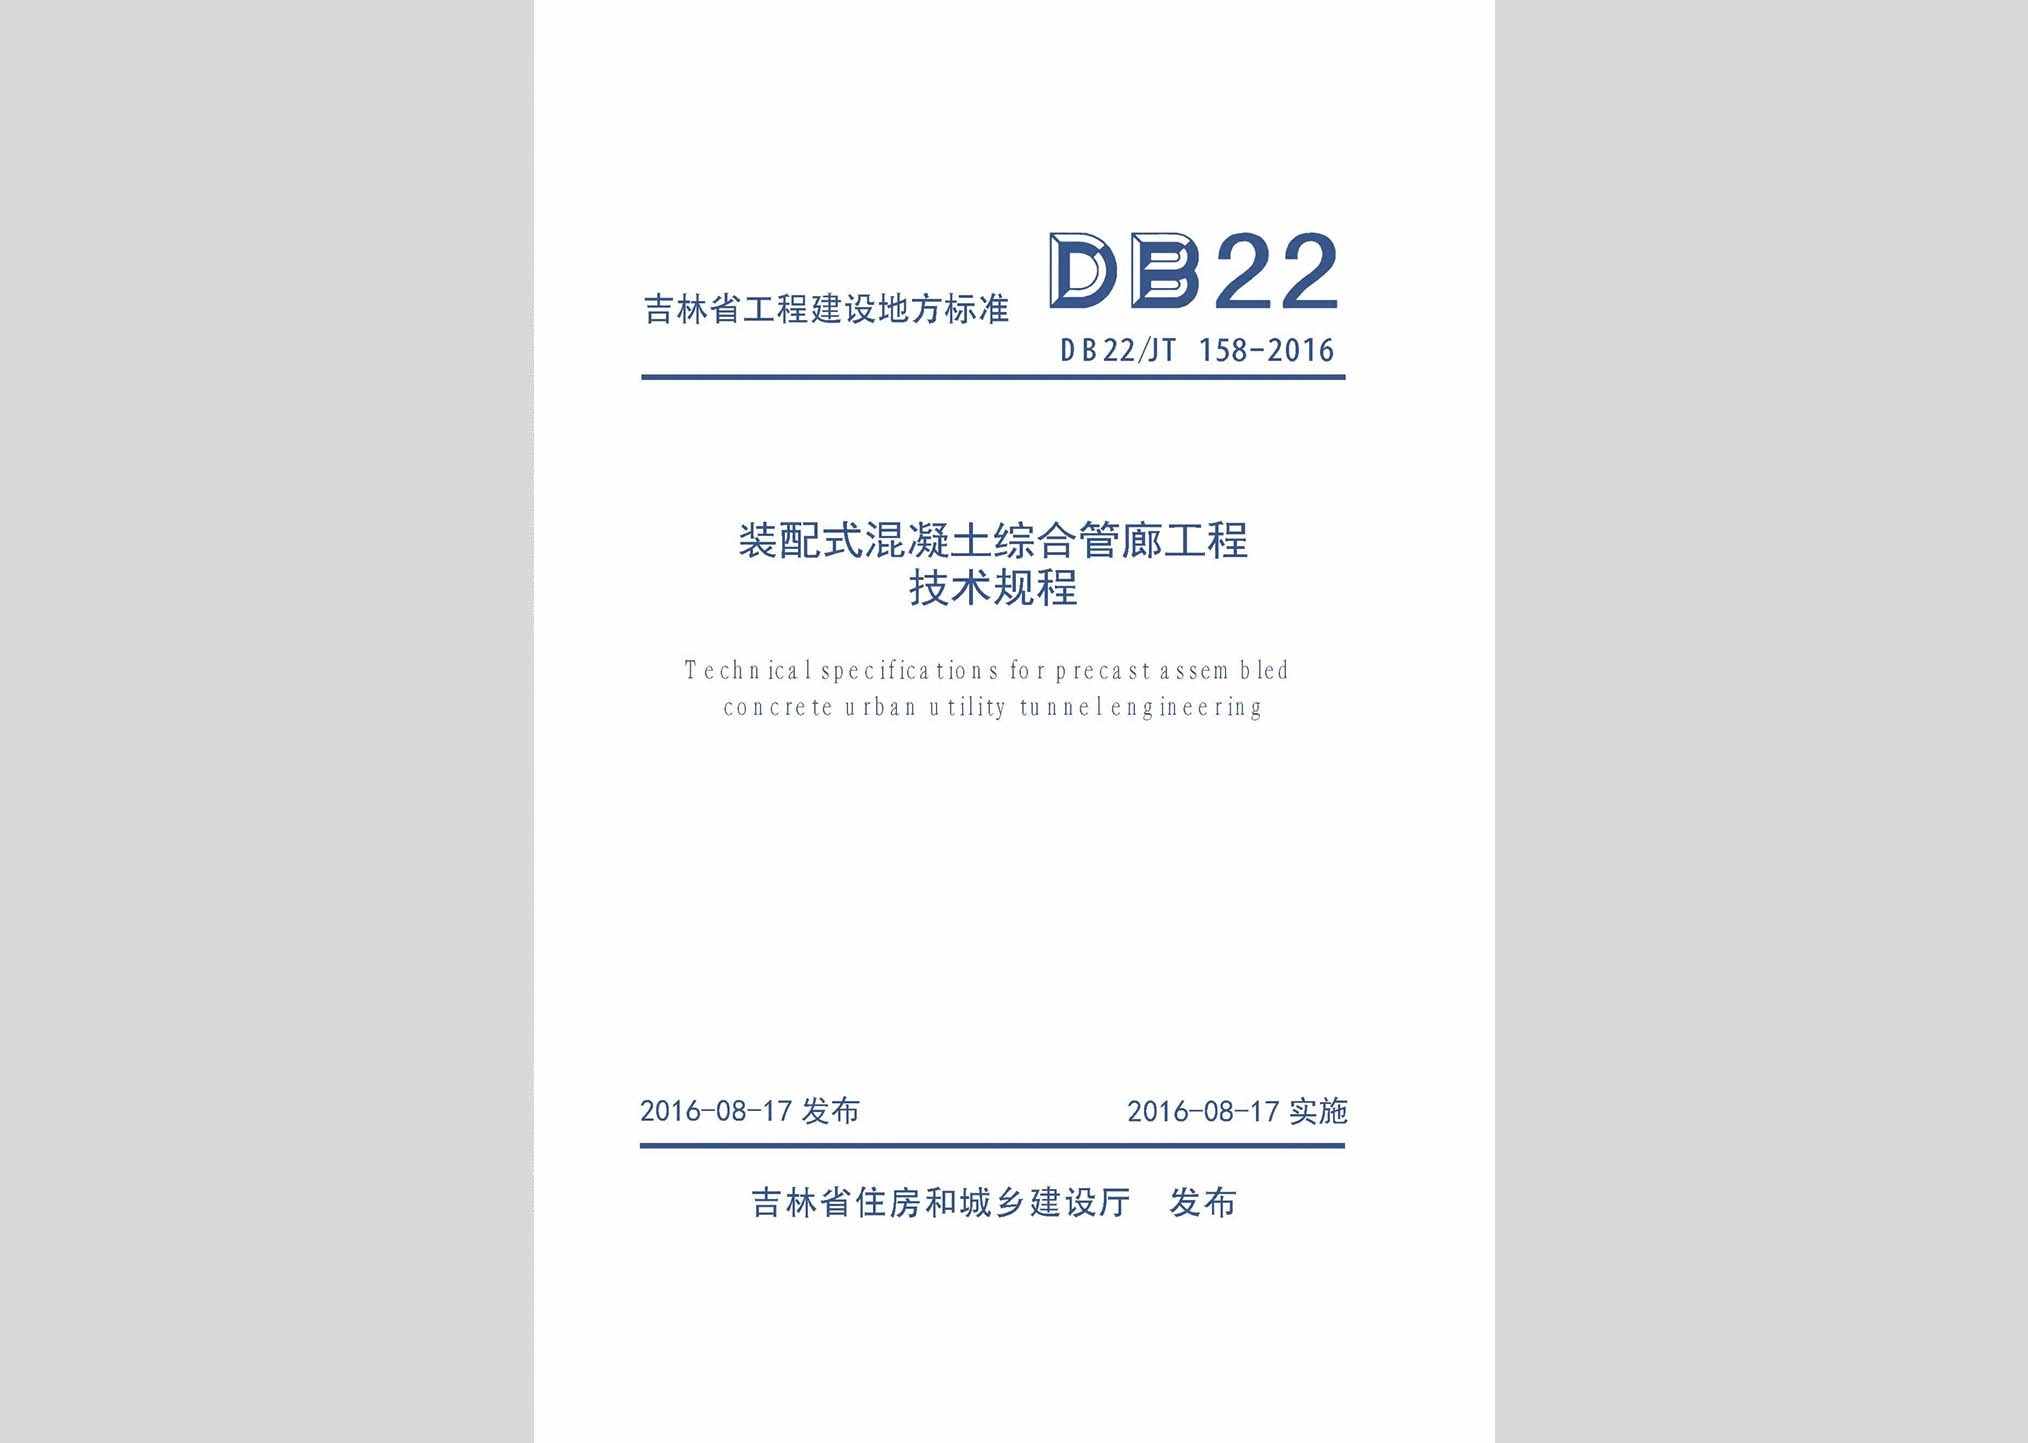 DB22/JT158-2016：装配式混凝土综合管廊工程技术规程